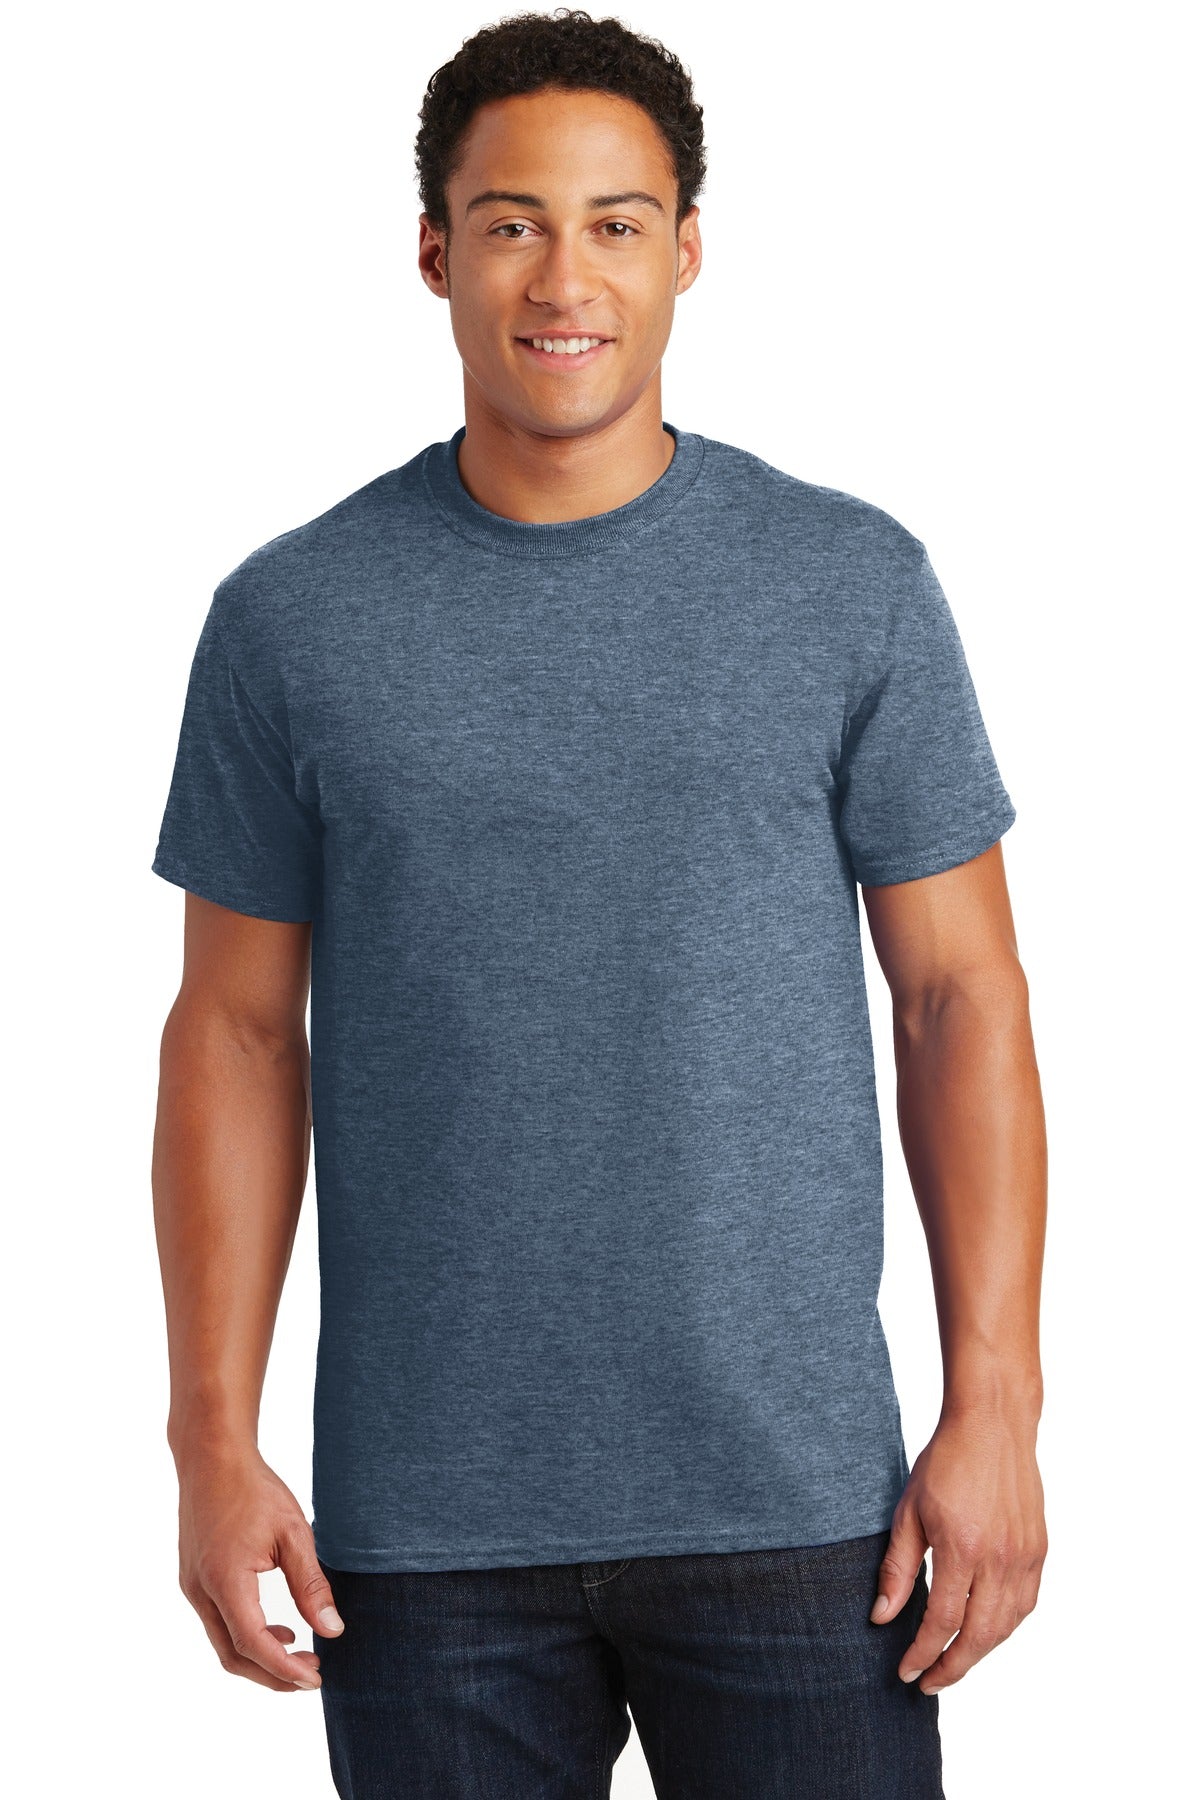 Gildan - Ultra Cotton 100% US Cotton T-Shirt. 2000 - Heathered Indigo